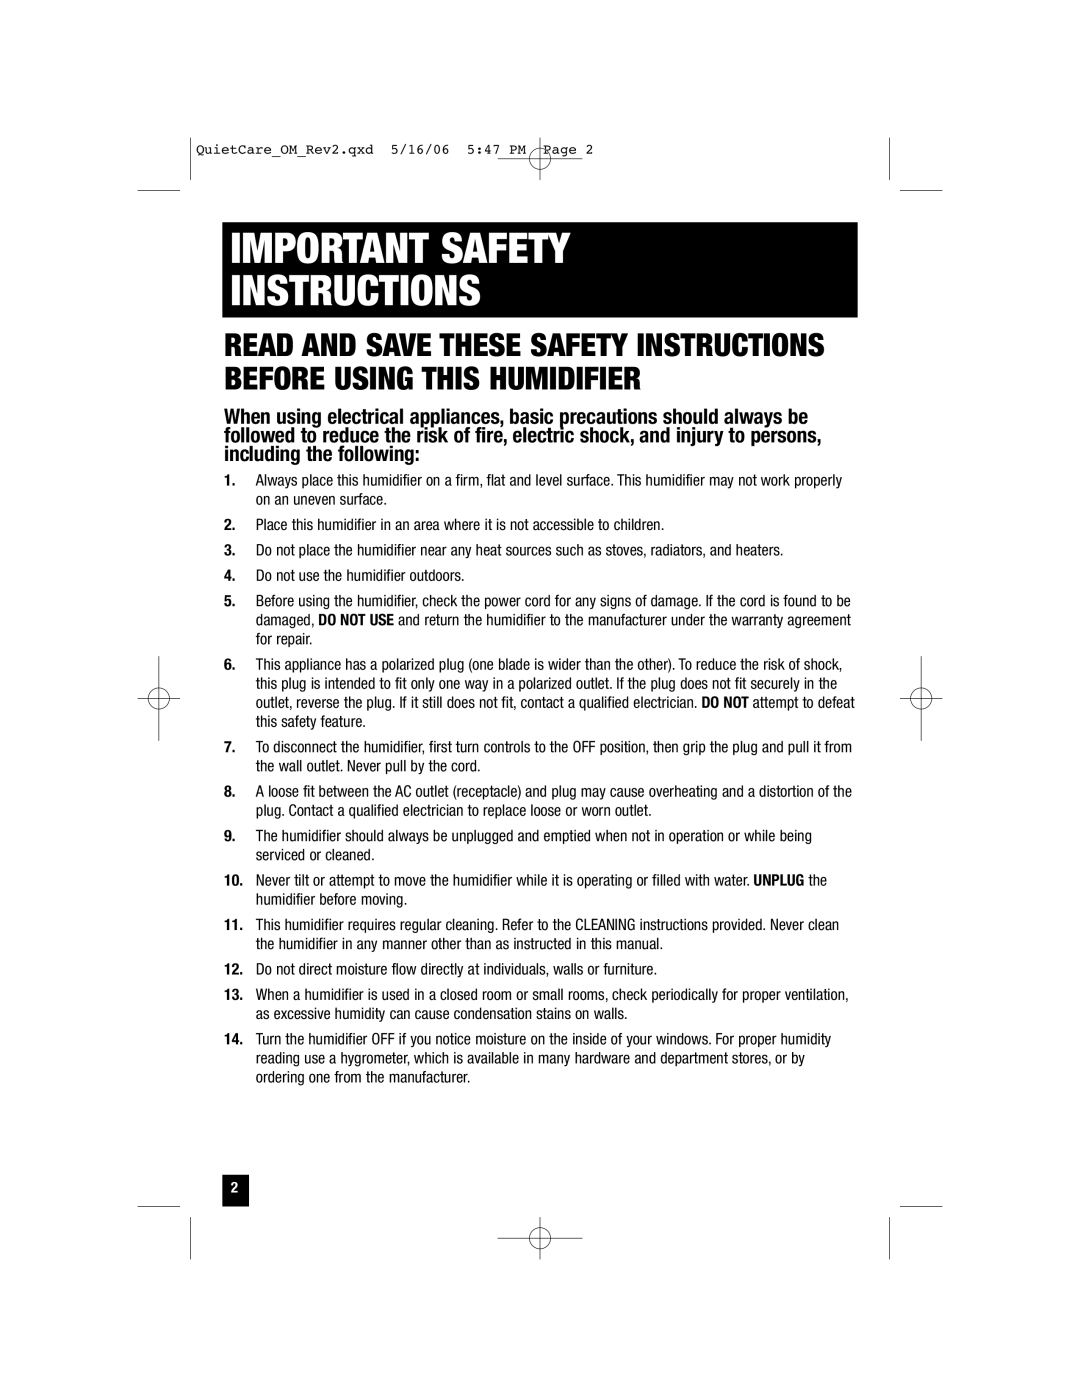 Honeywell HCM-645, HCM-650, HCM-646, HCM-640BW, HCM-635, HCM-630 owner manual Important Safety Instructions 